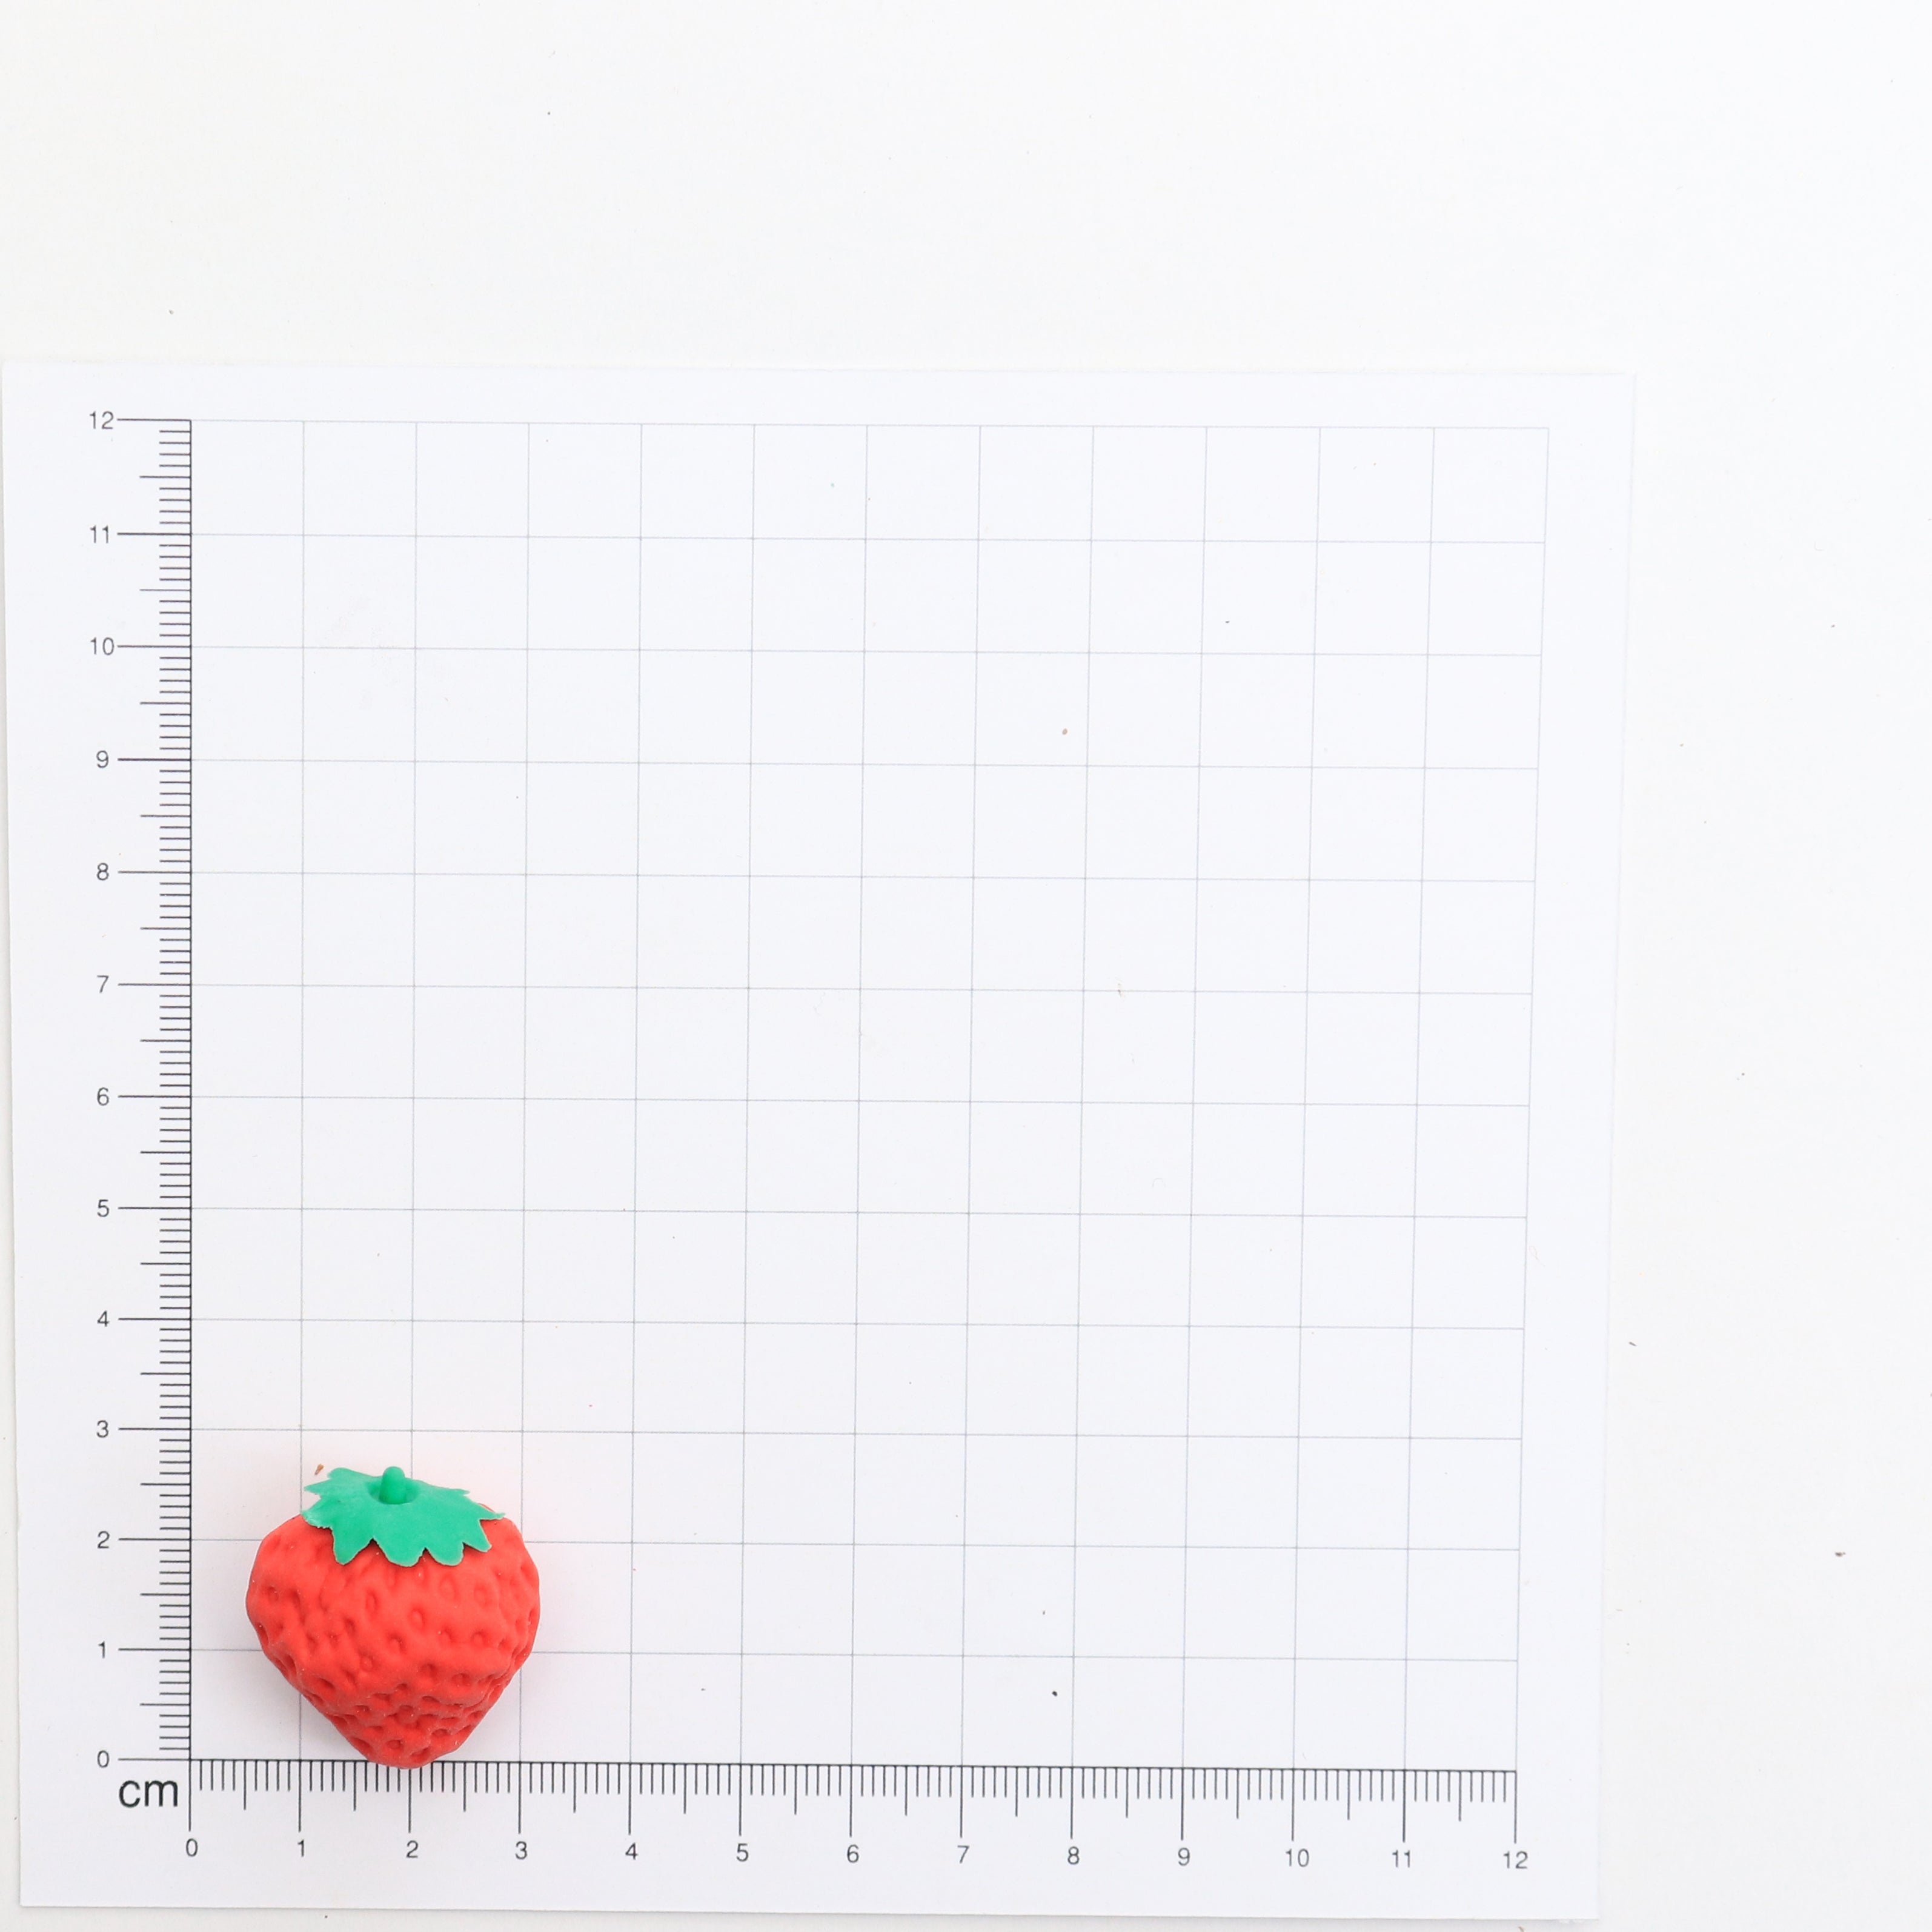 Eraser Strawberry 1Pc Ib